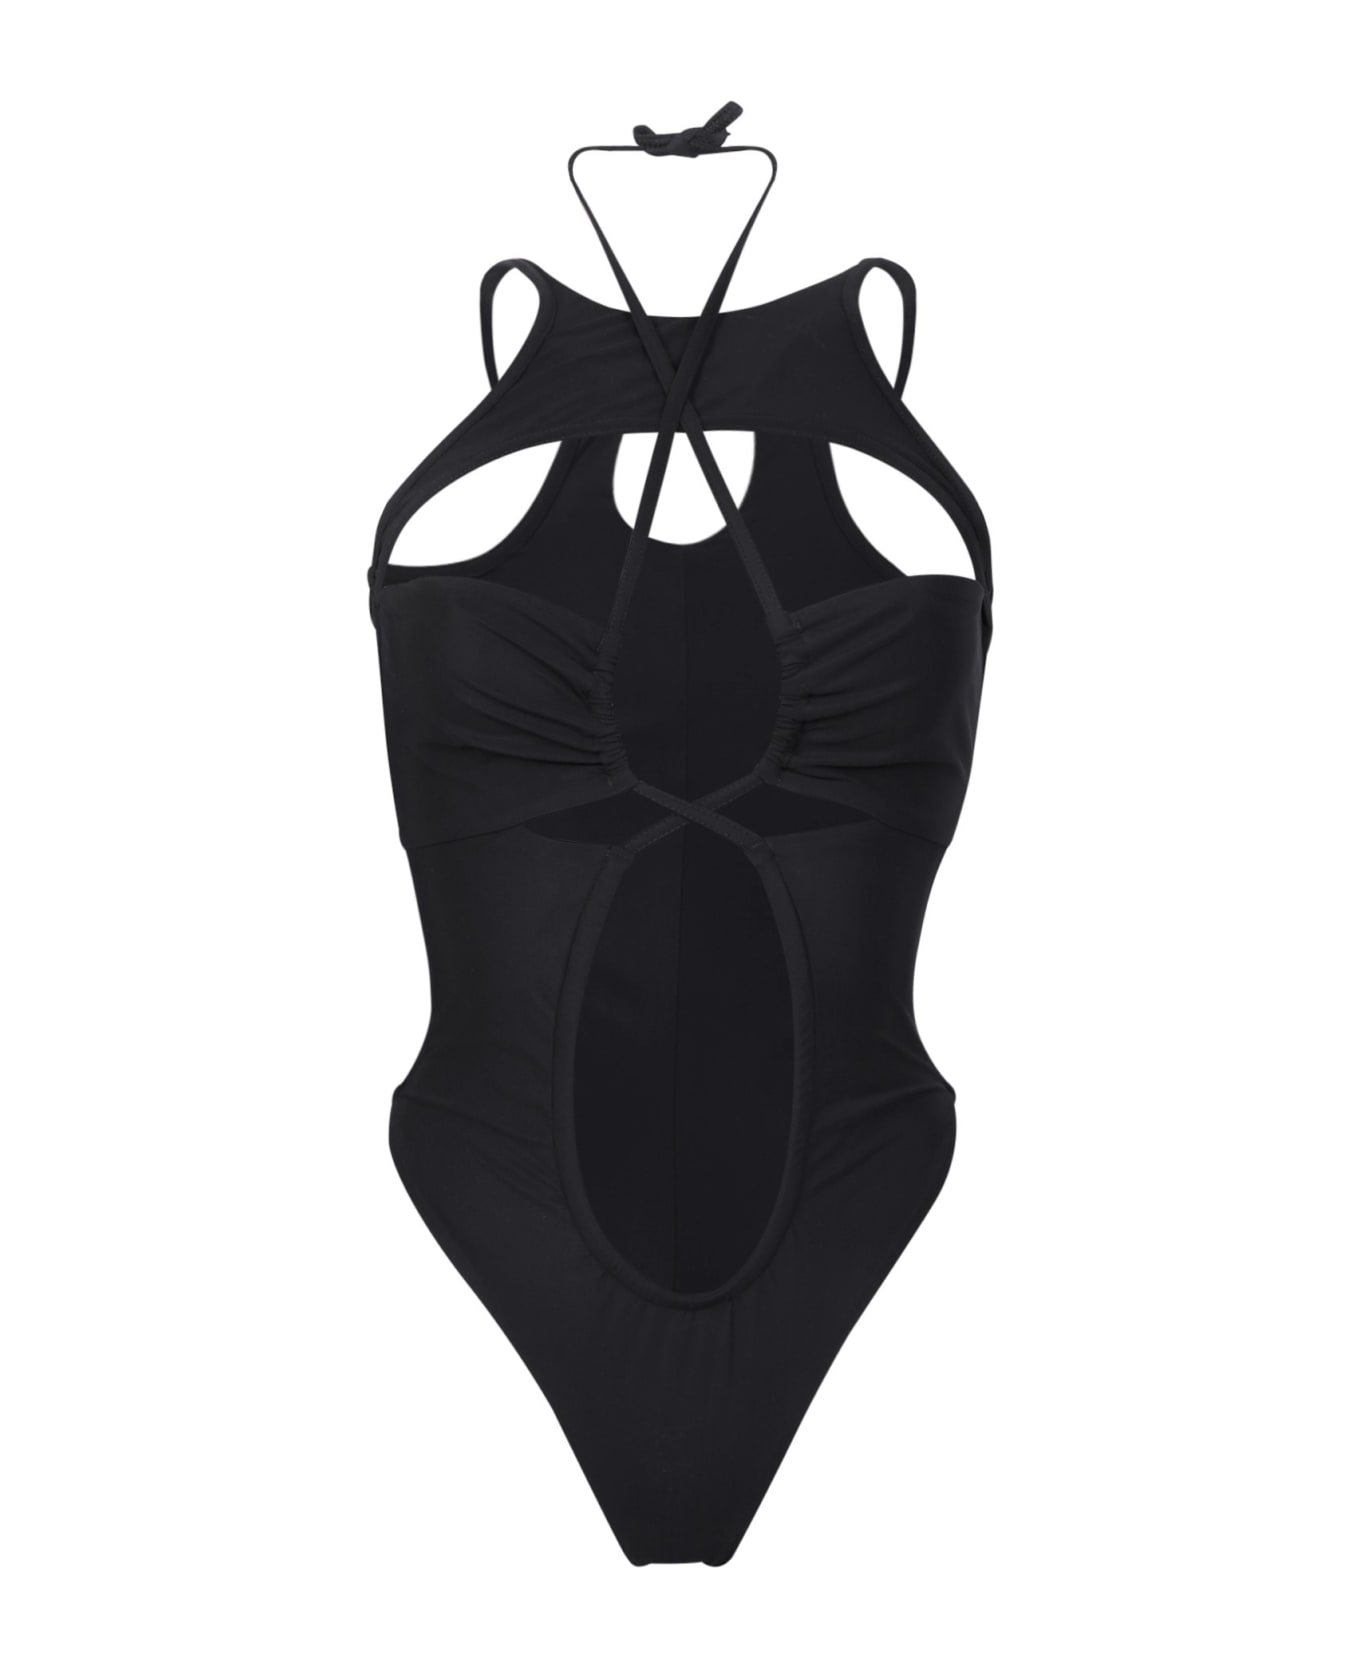 ANDREĀDAMO One-piece Black Swimwear - Black